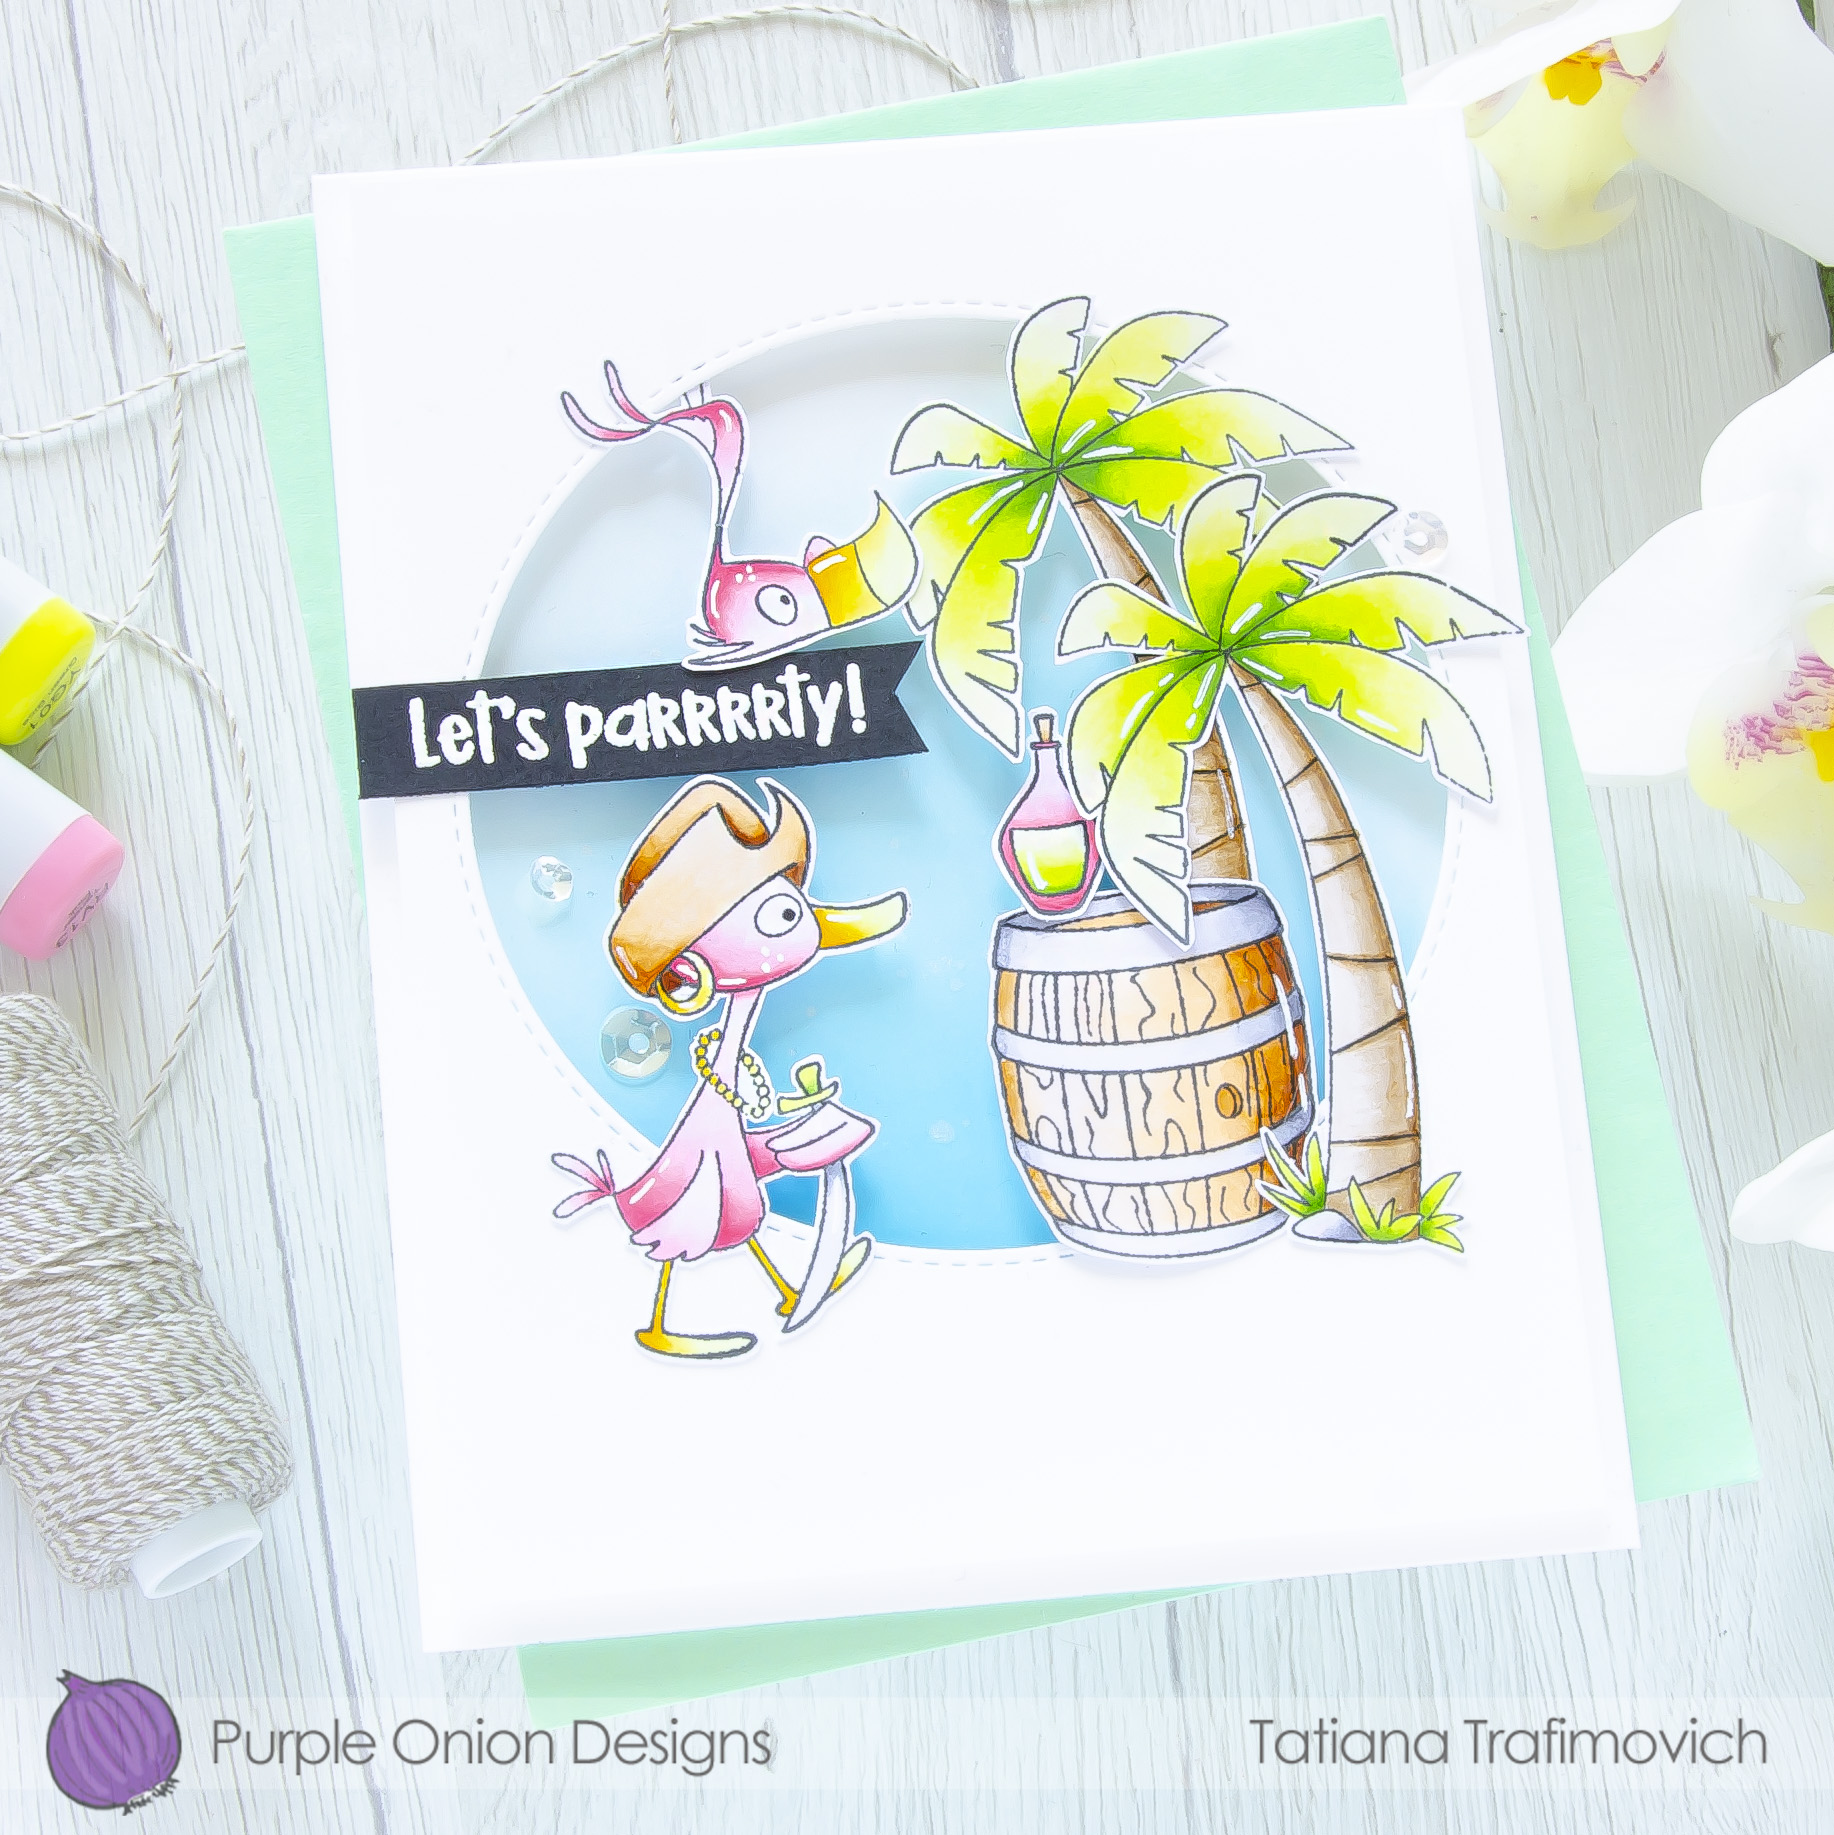 Let's Parrrrty! #handmade card by Tatiana Trafimovich #tatianacraftandart - stamps by Purple Onion Designs